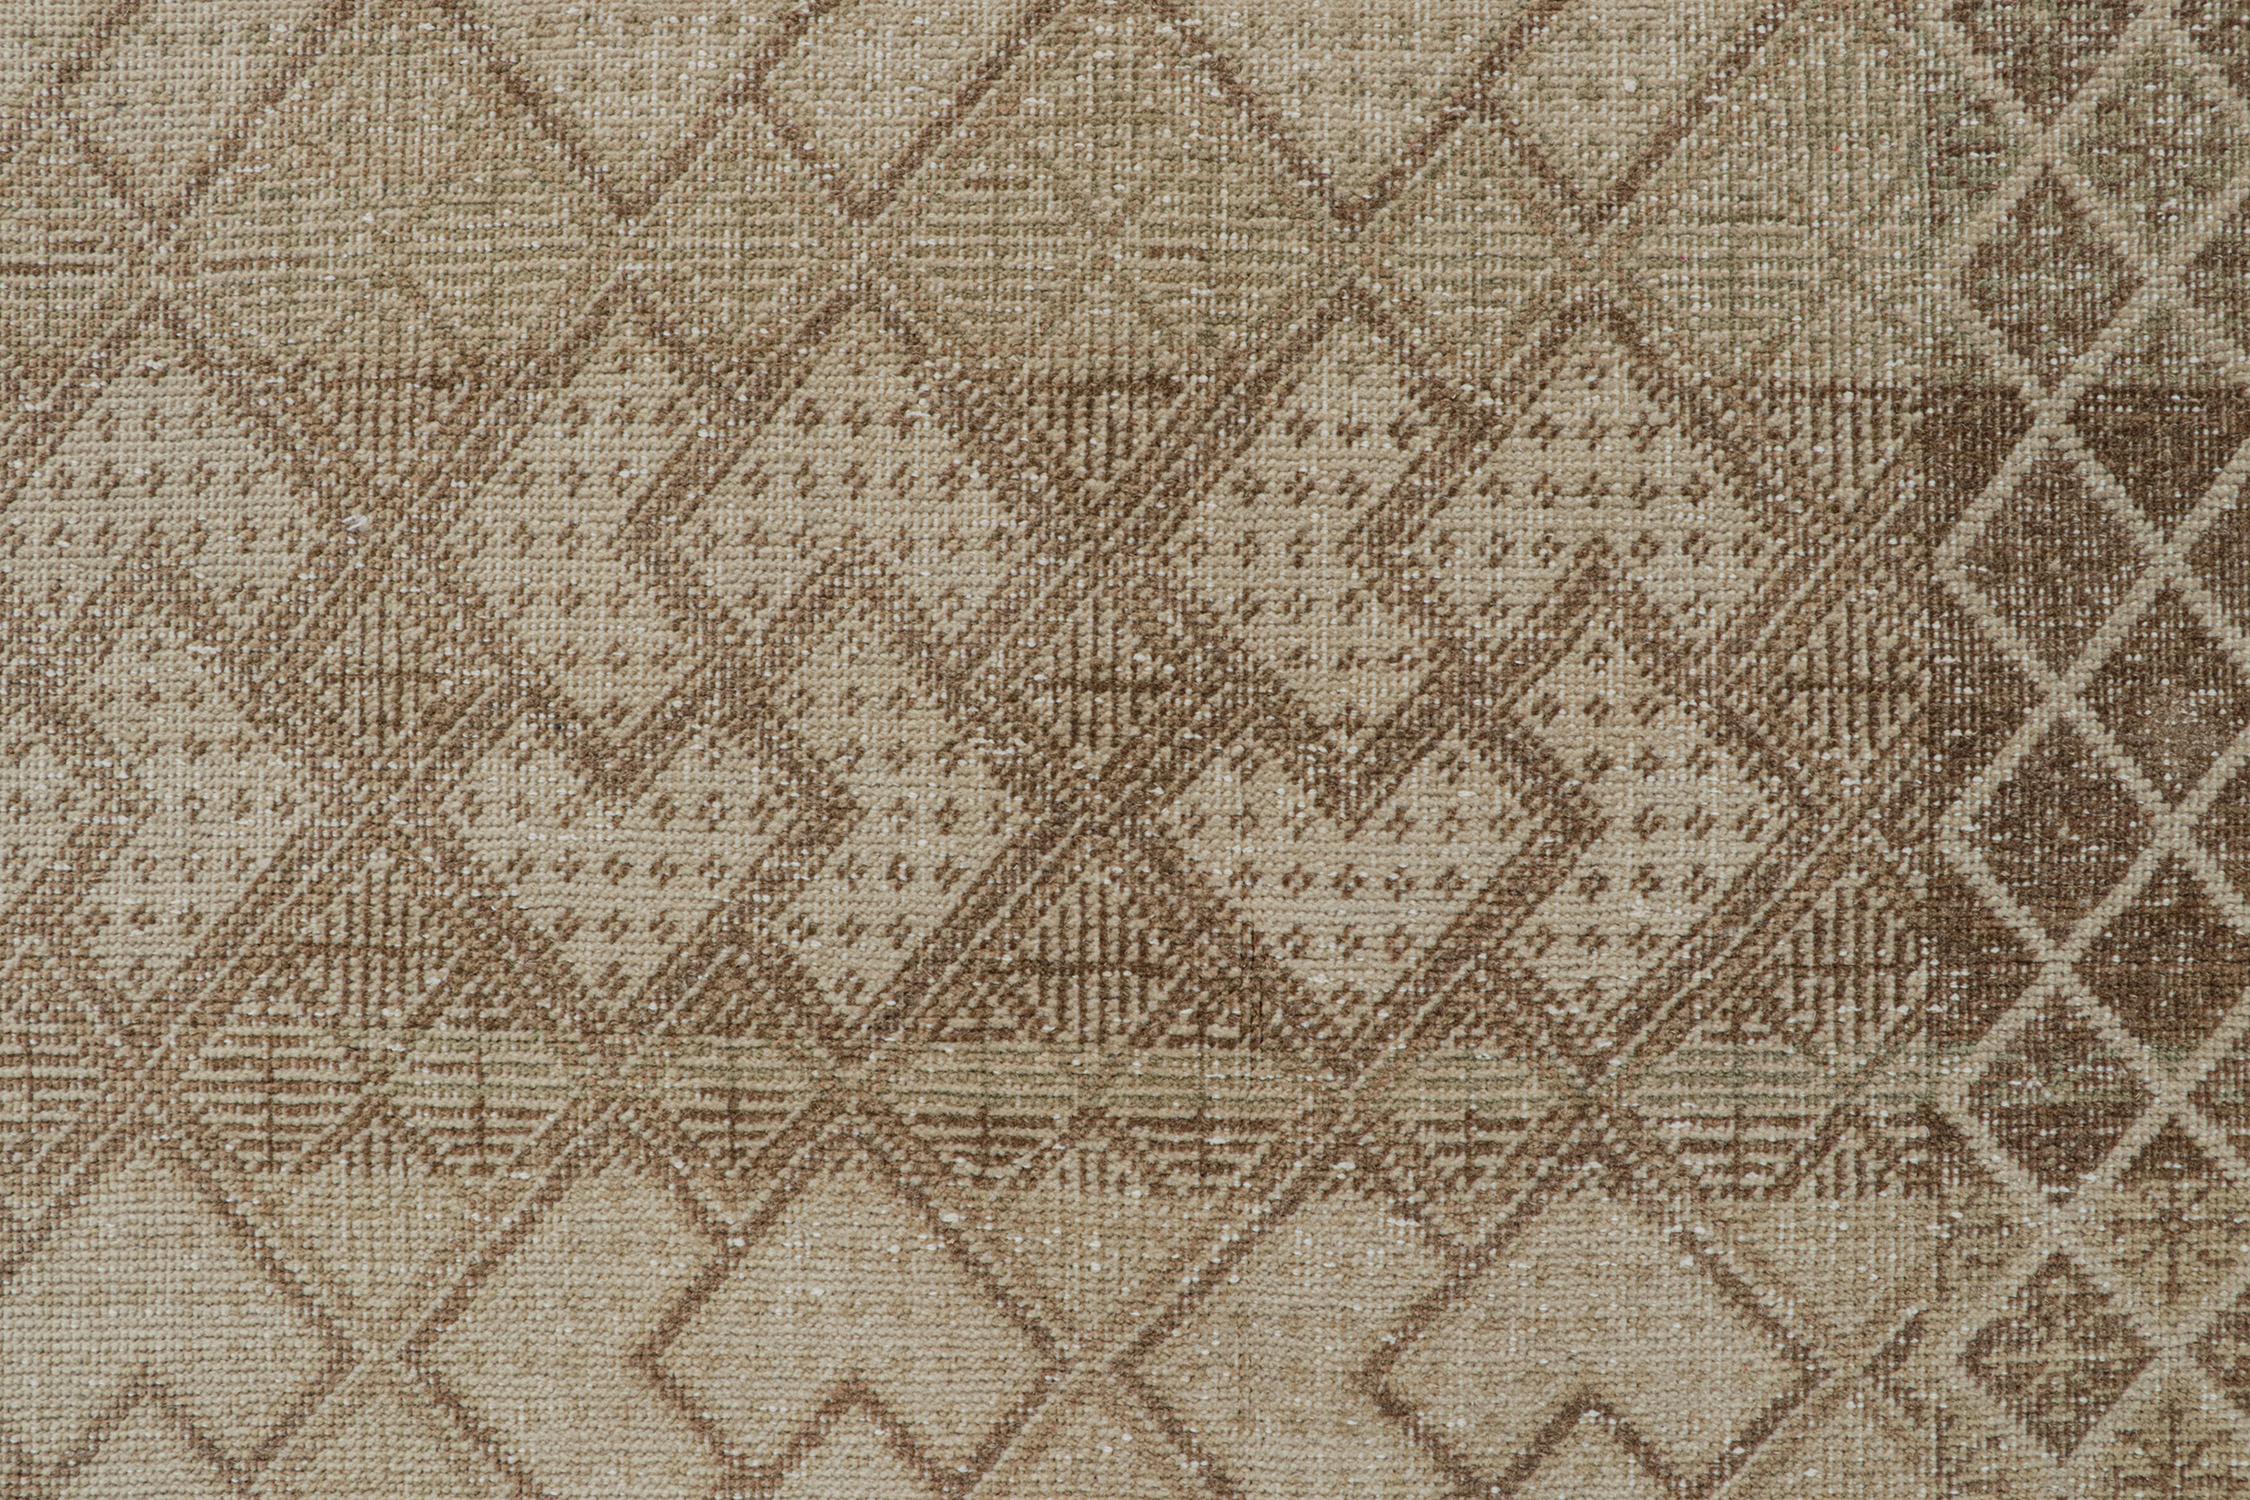 Modern Vintage Zeki Müren Rug in Beige-Brown Patterns by Rug & Kilim For Sale